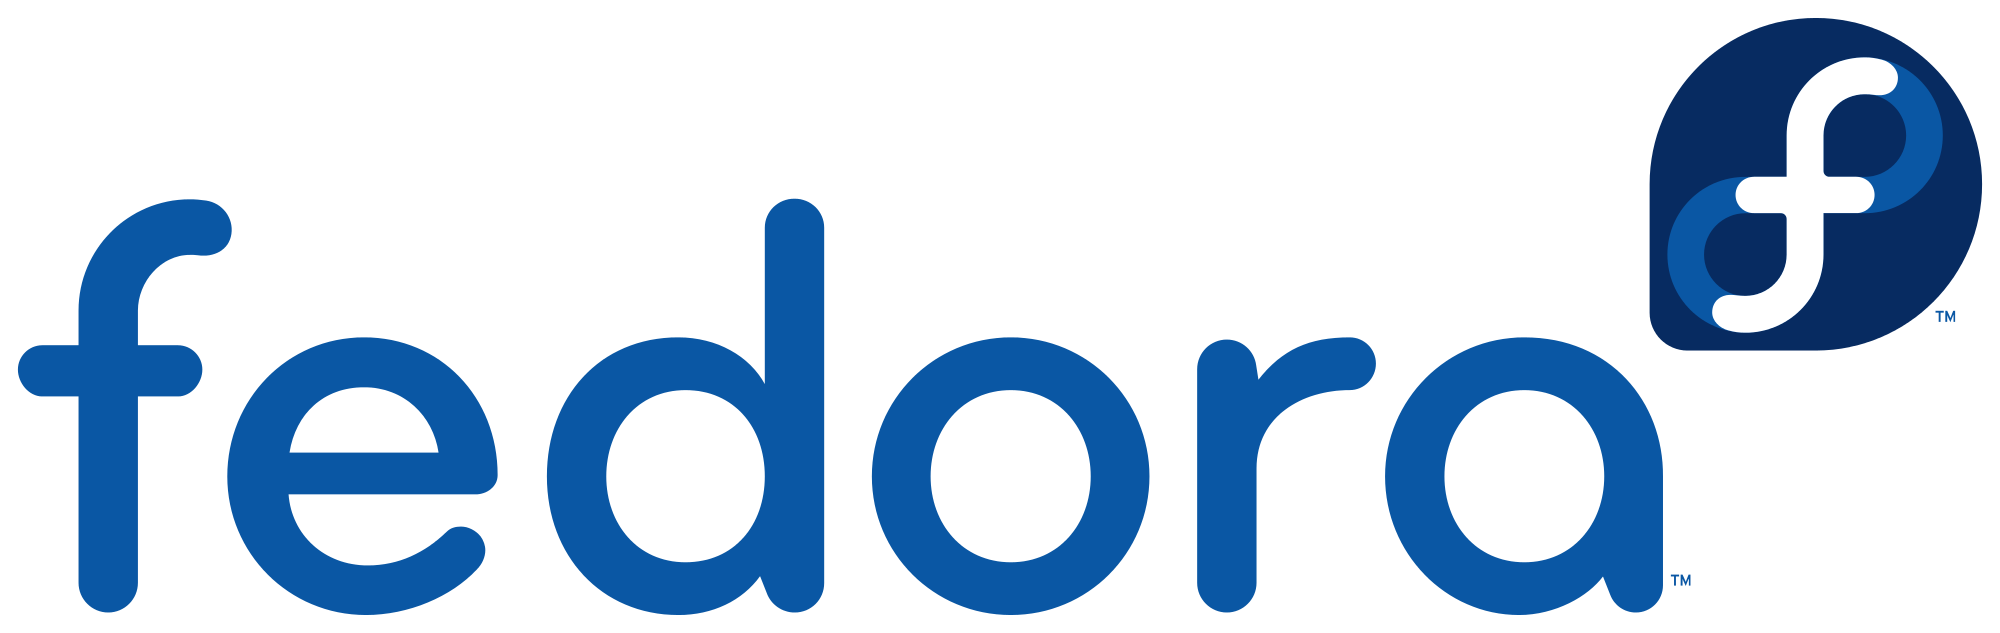 Fedora_logo_and_wordmark.svg